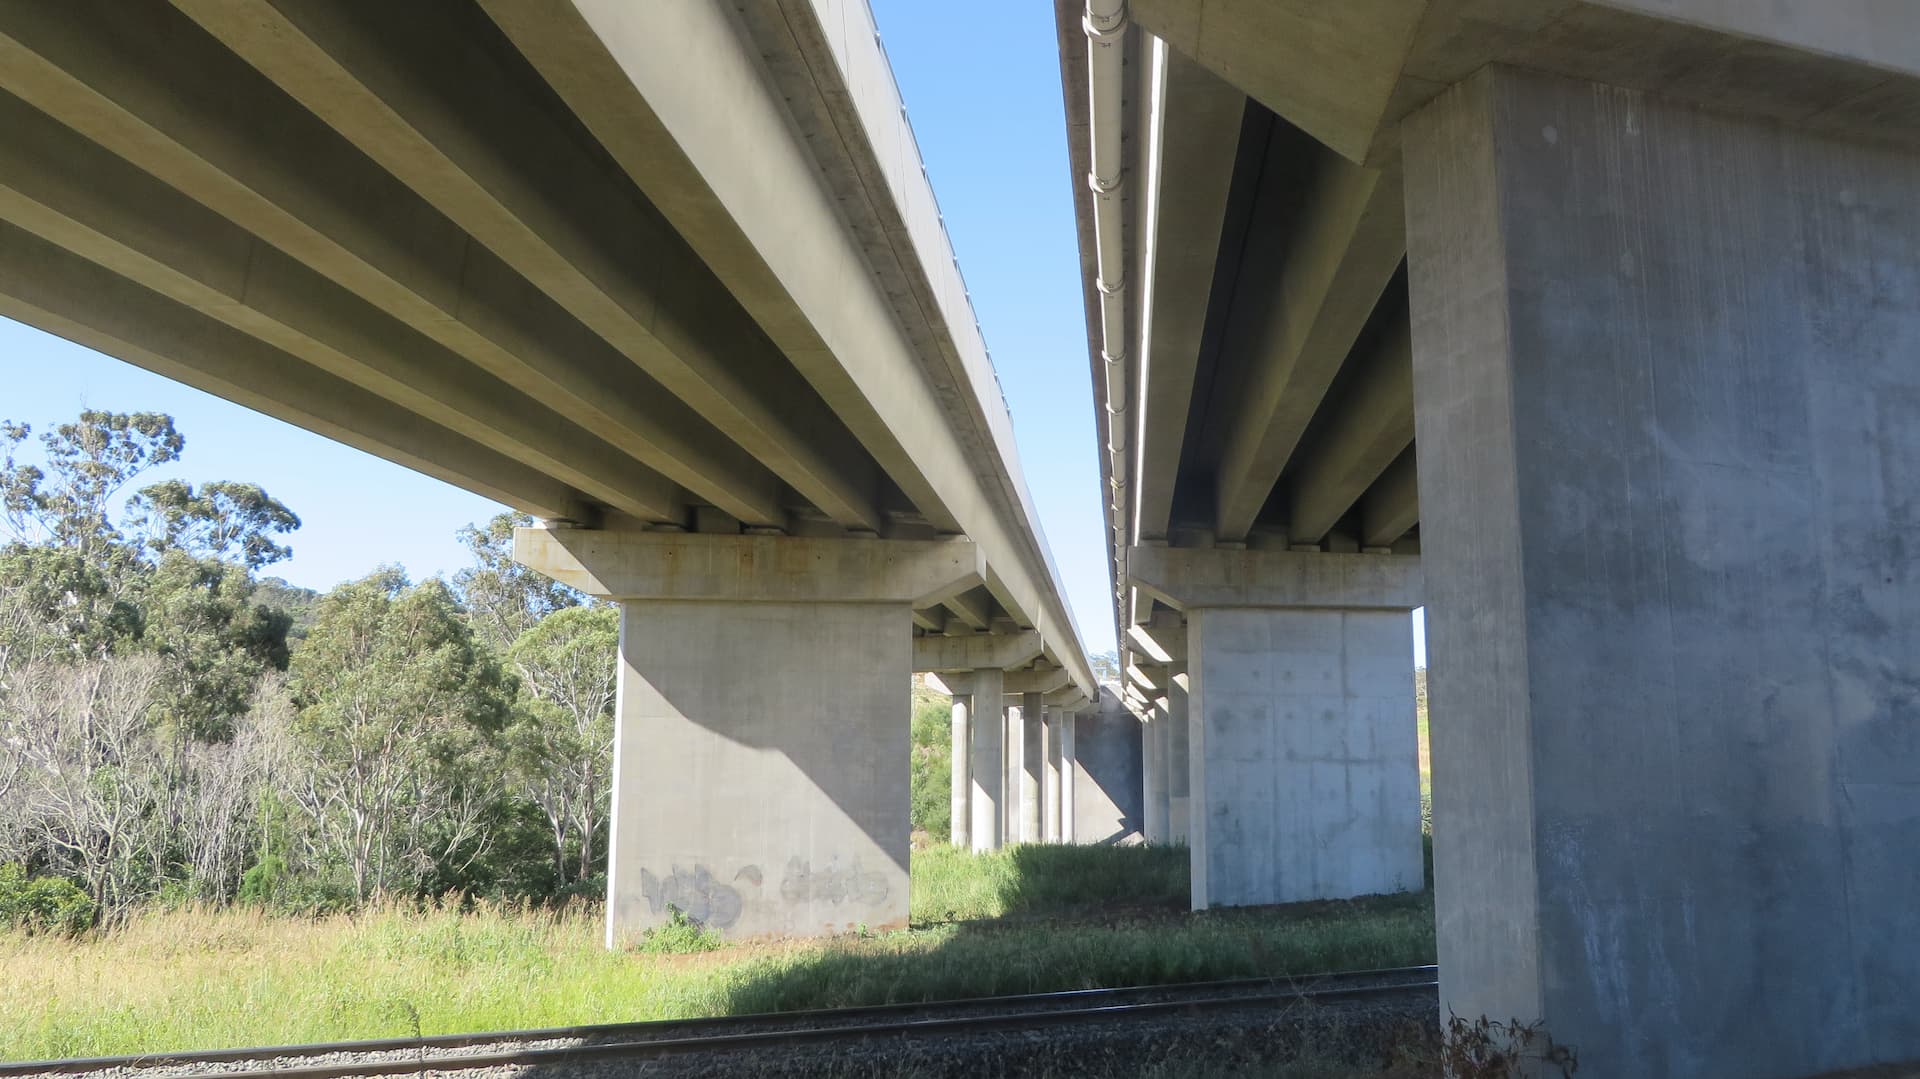 Photo from under a bridge